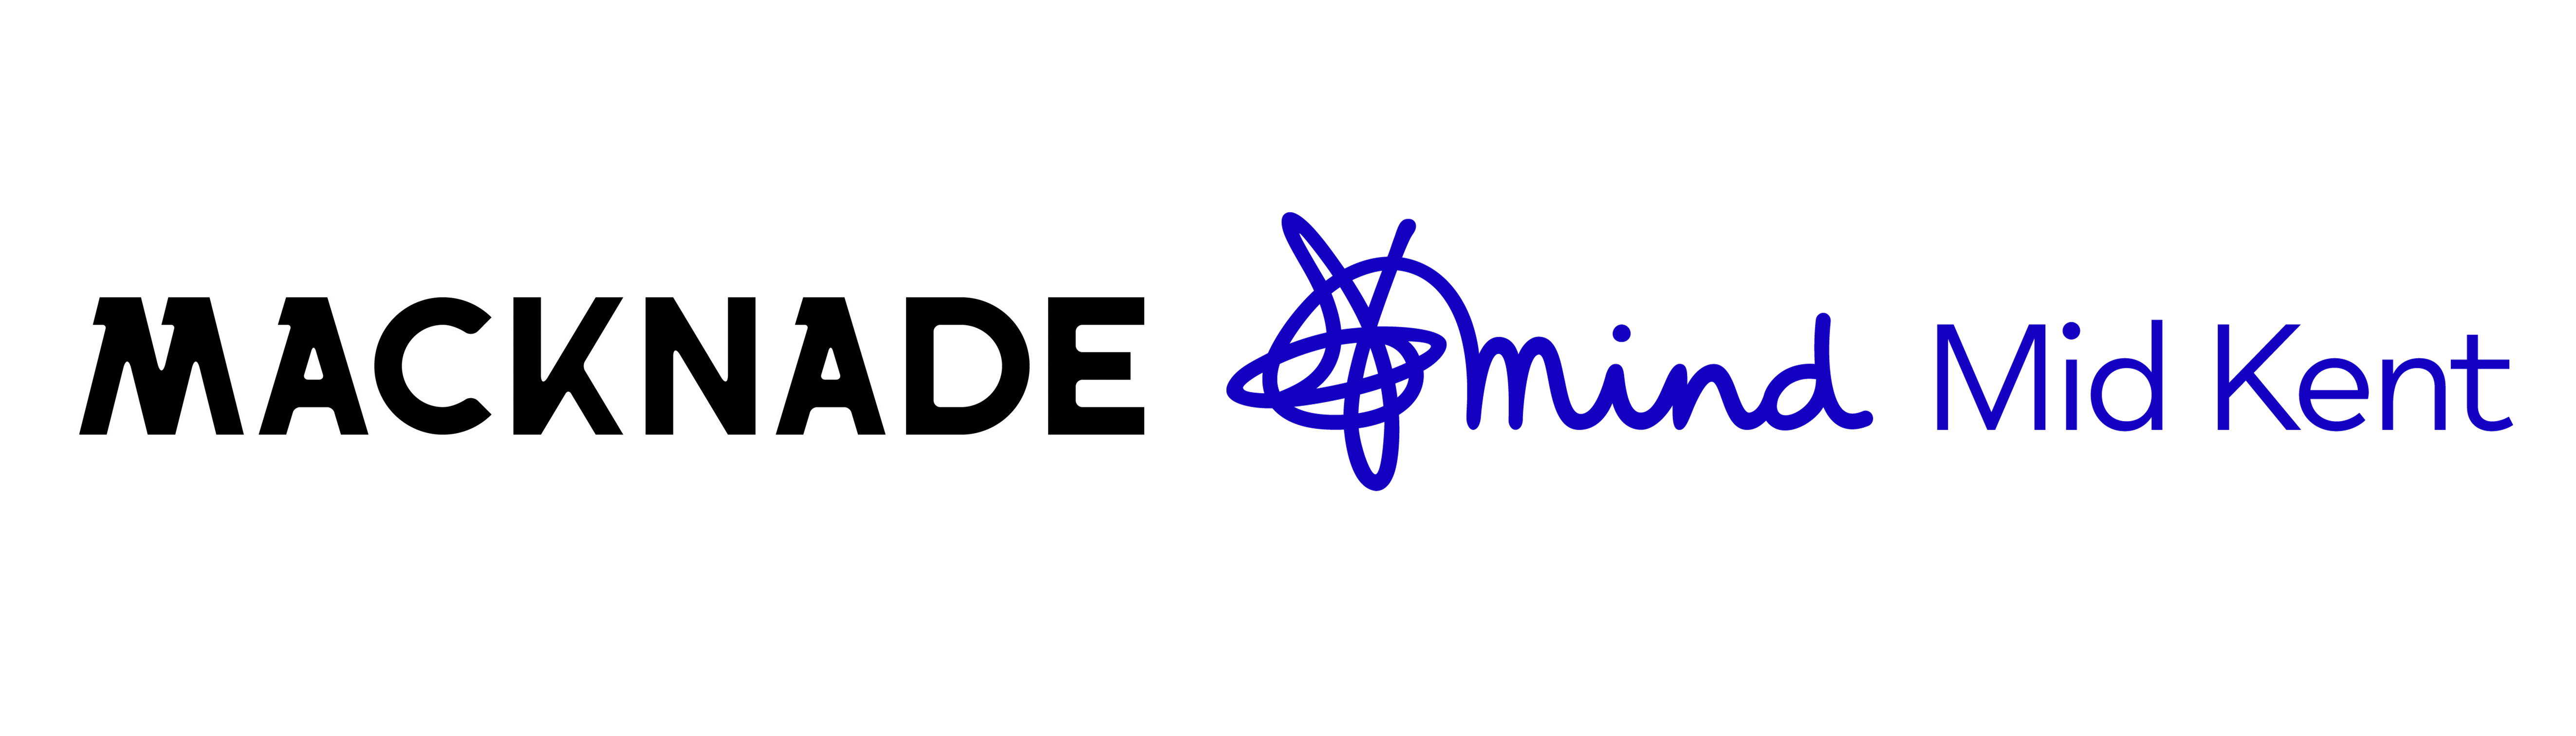 Macknade & Mid Kent Mind Logo